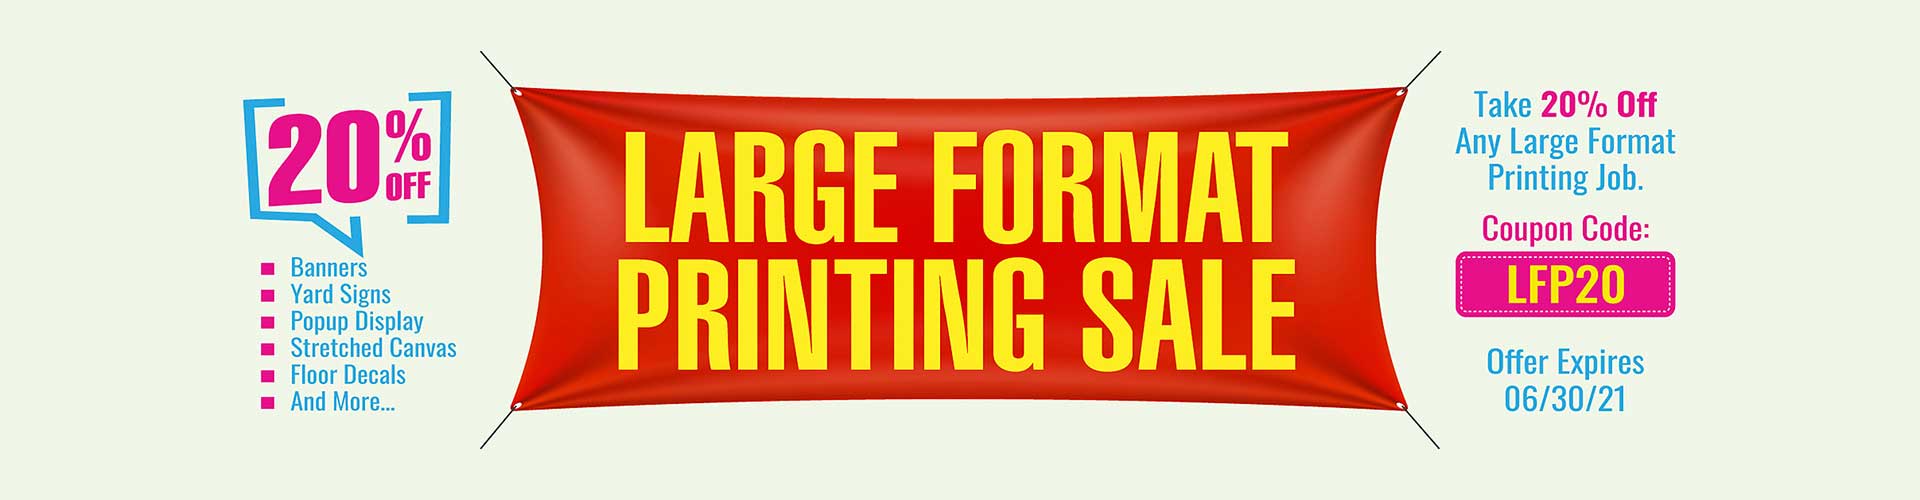 Large Format Printing Sale